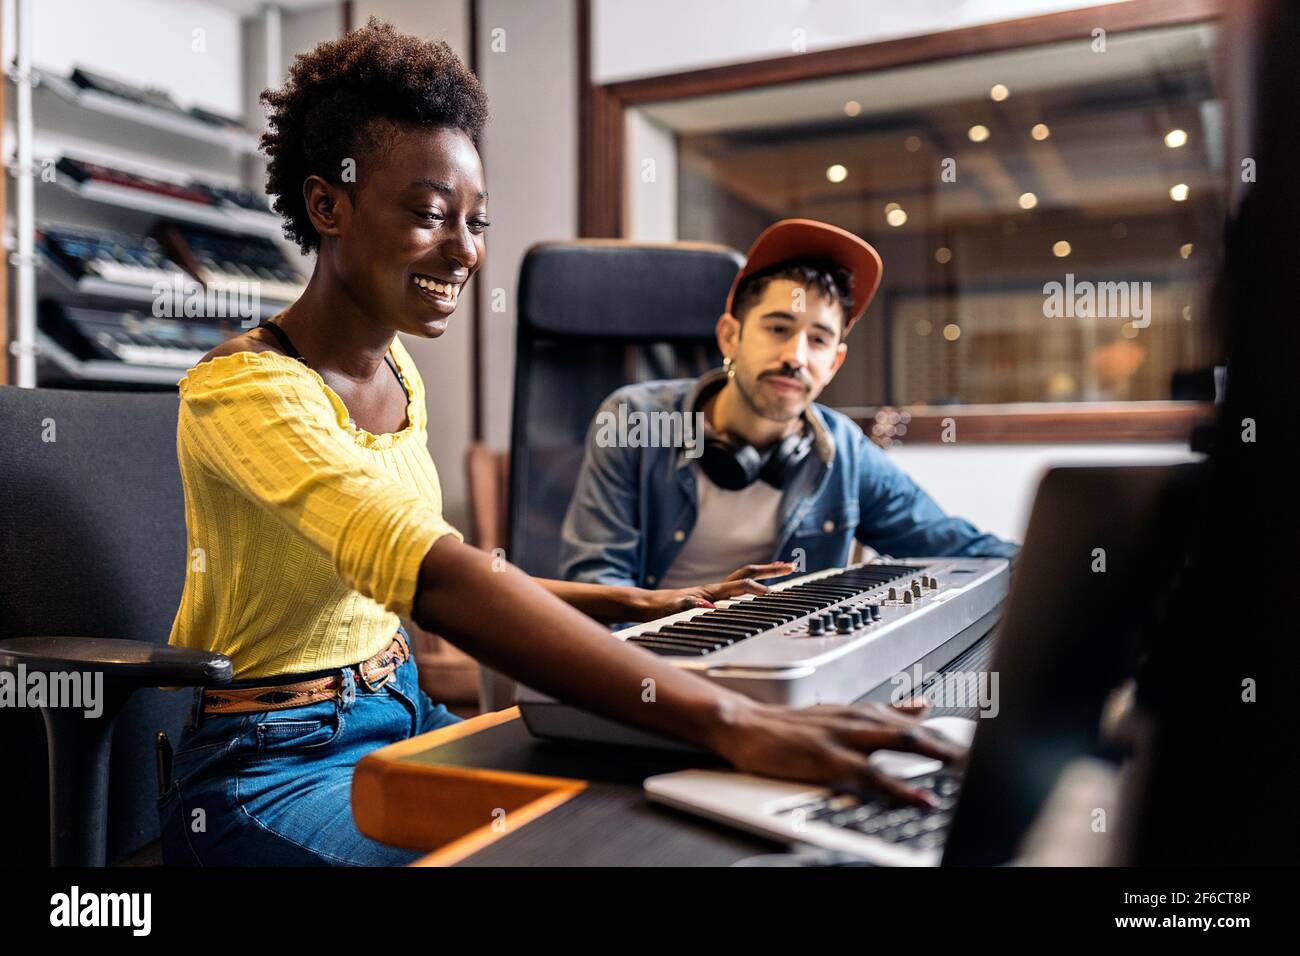 Stock photo of black woman playing electronic piano keyboard in music studio. Stock Photo